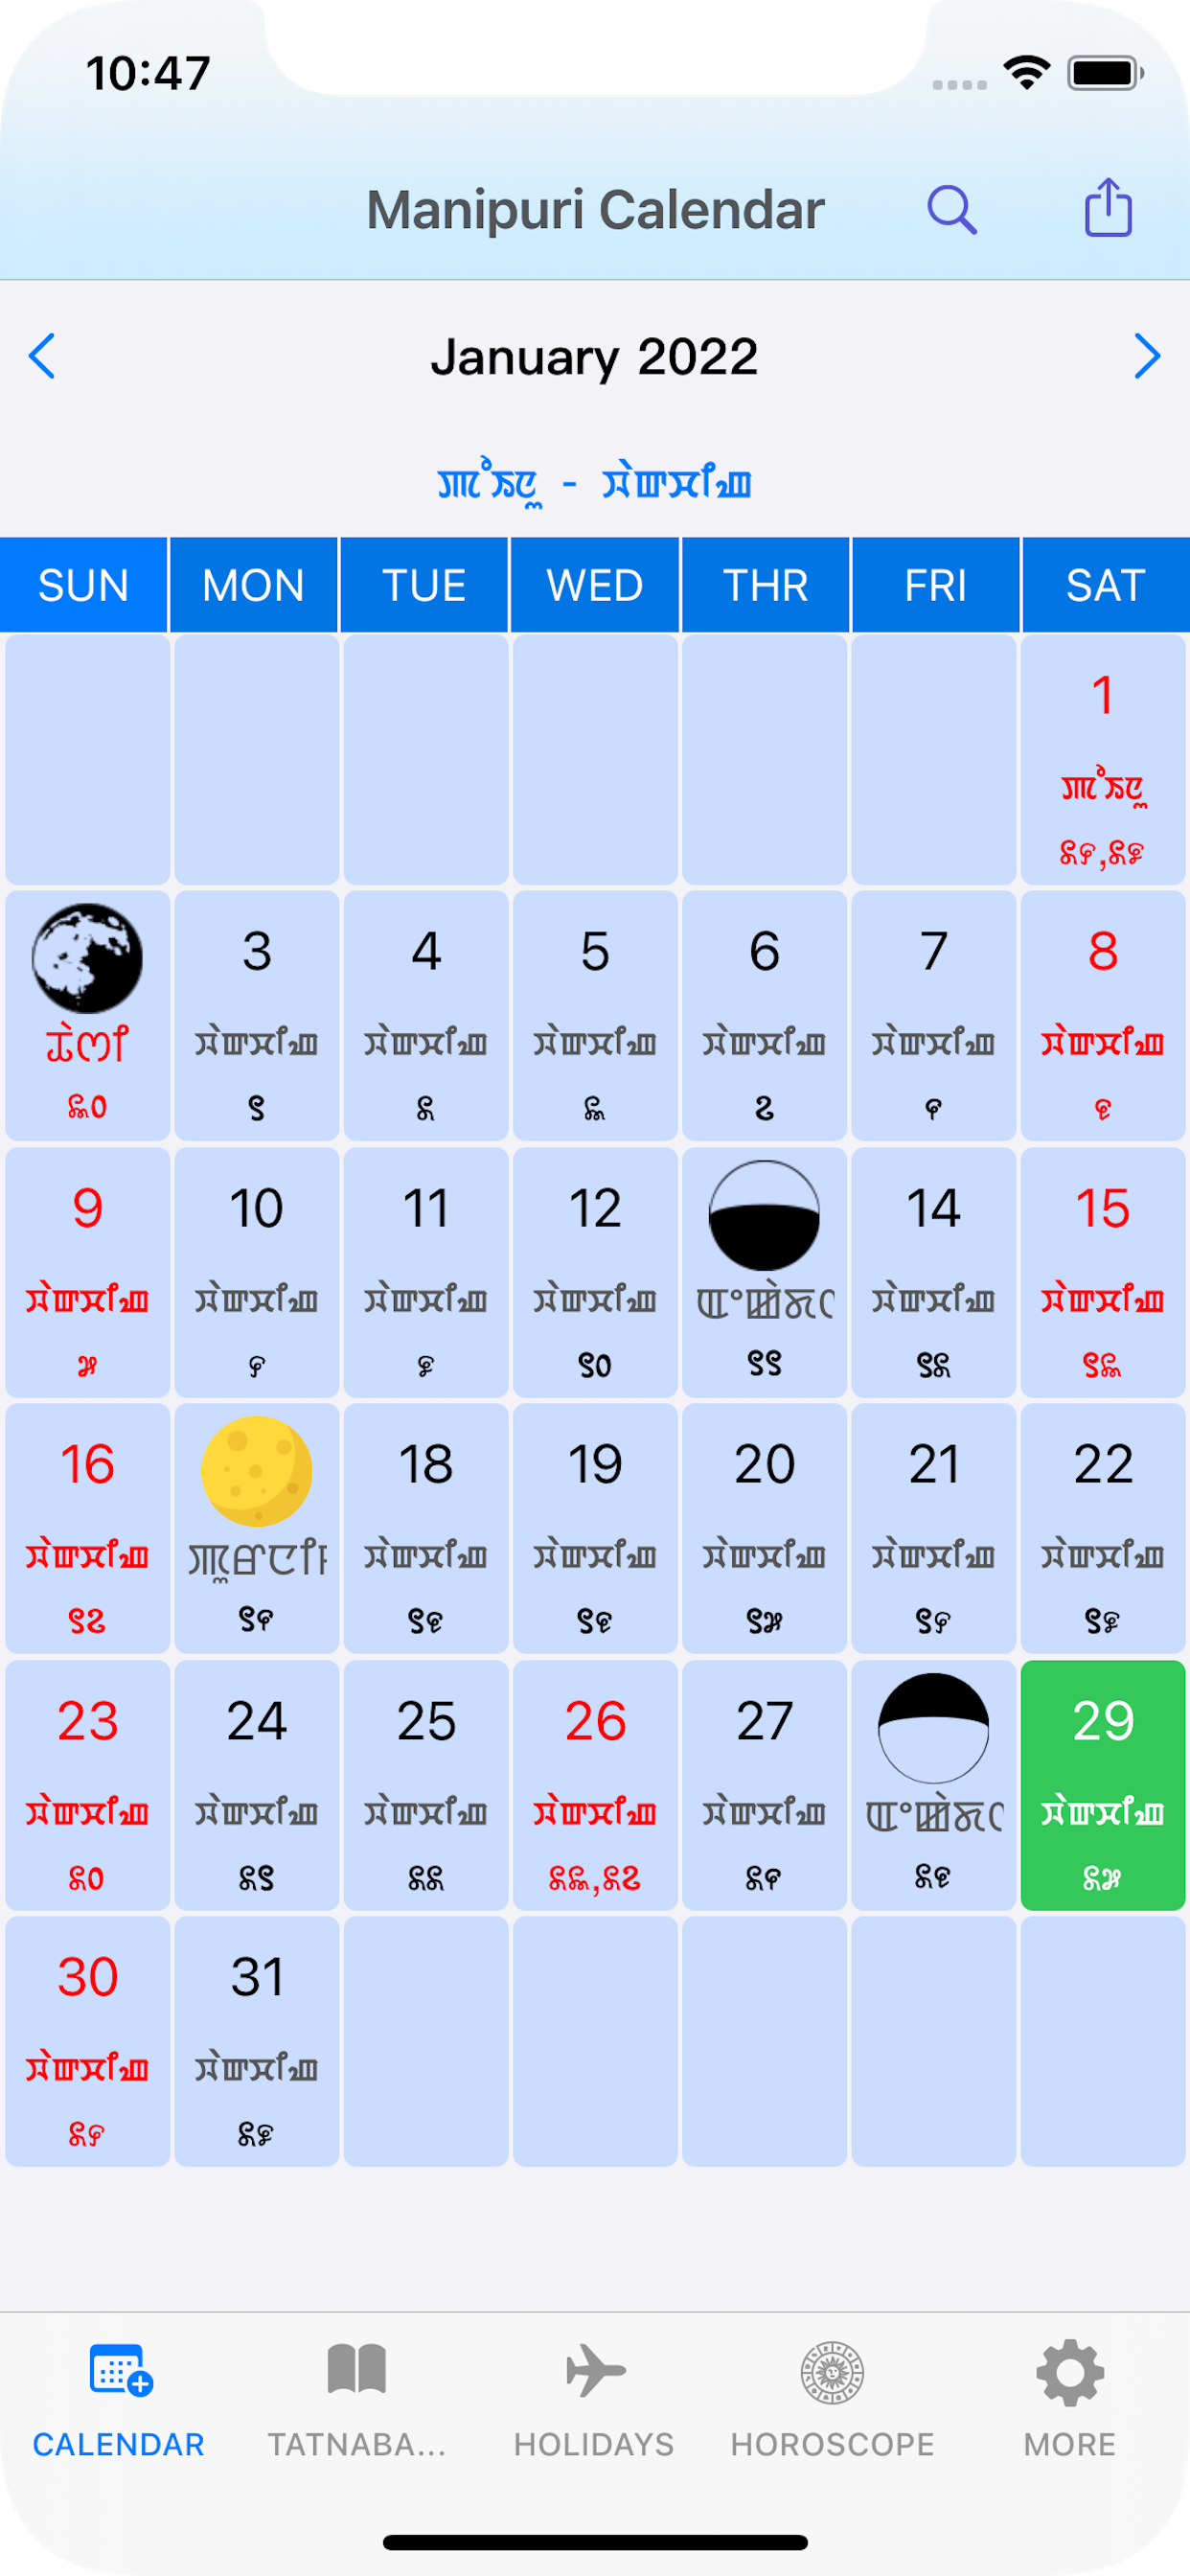 Manipuri Calendar